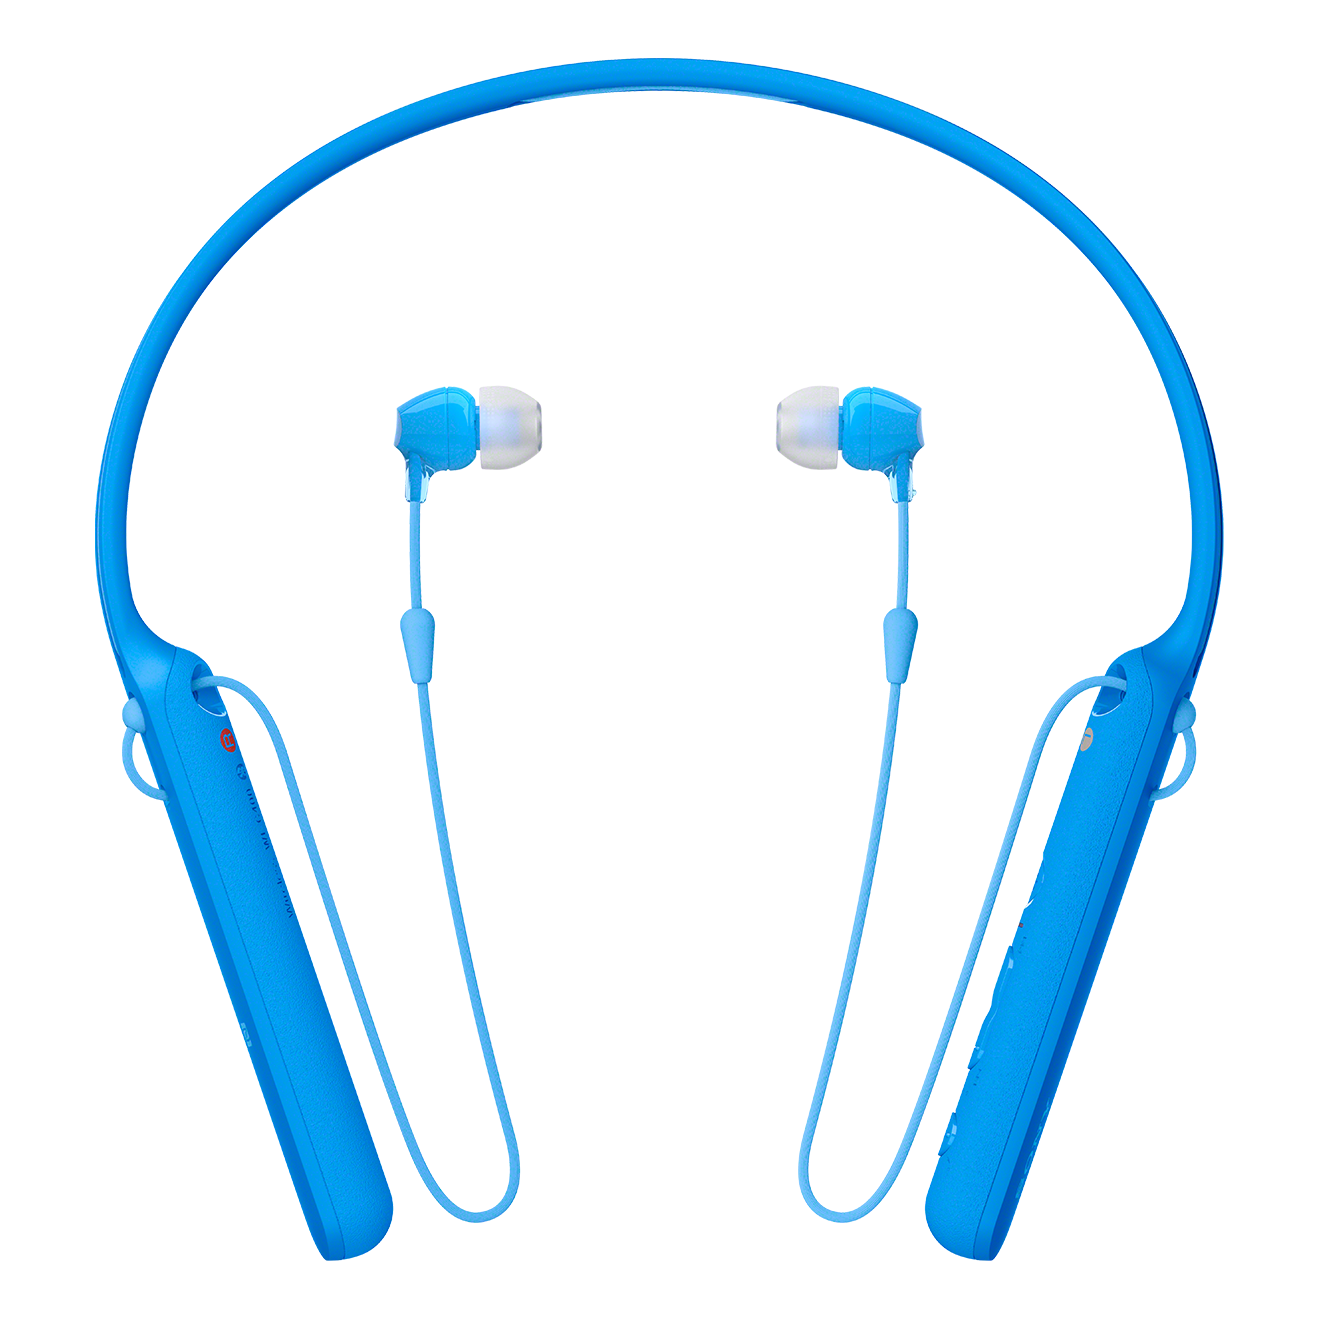 Kopfhörer Neckband SONY Blau WI-C 400, Bluetooth